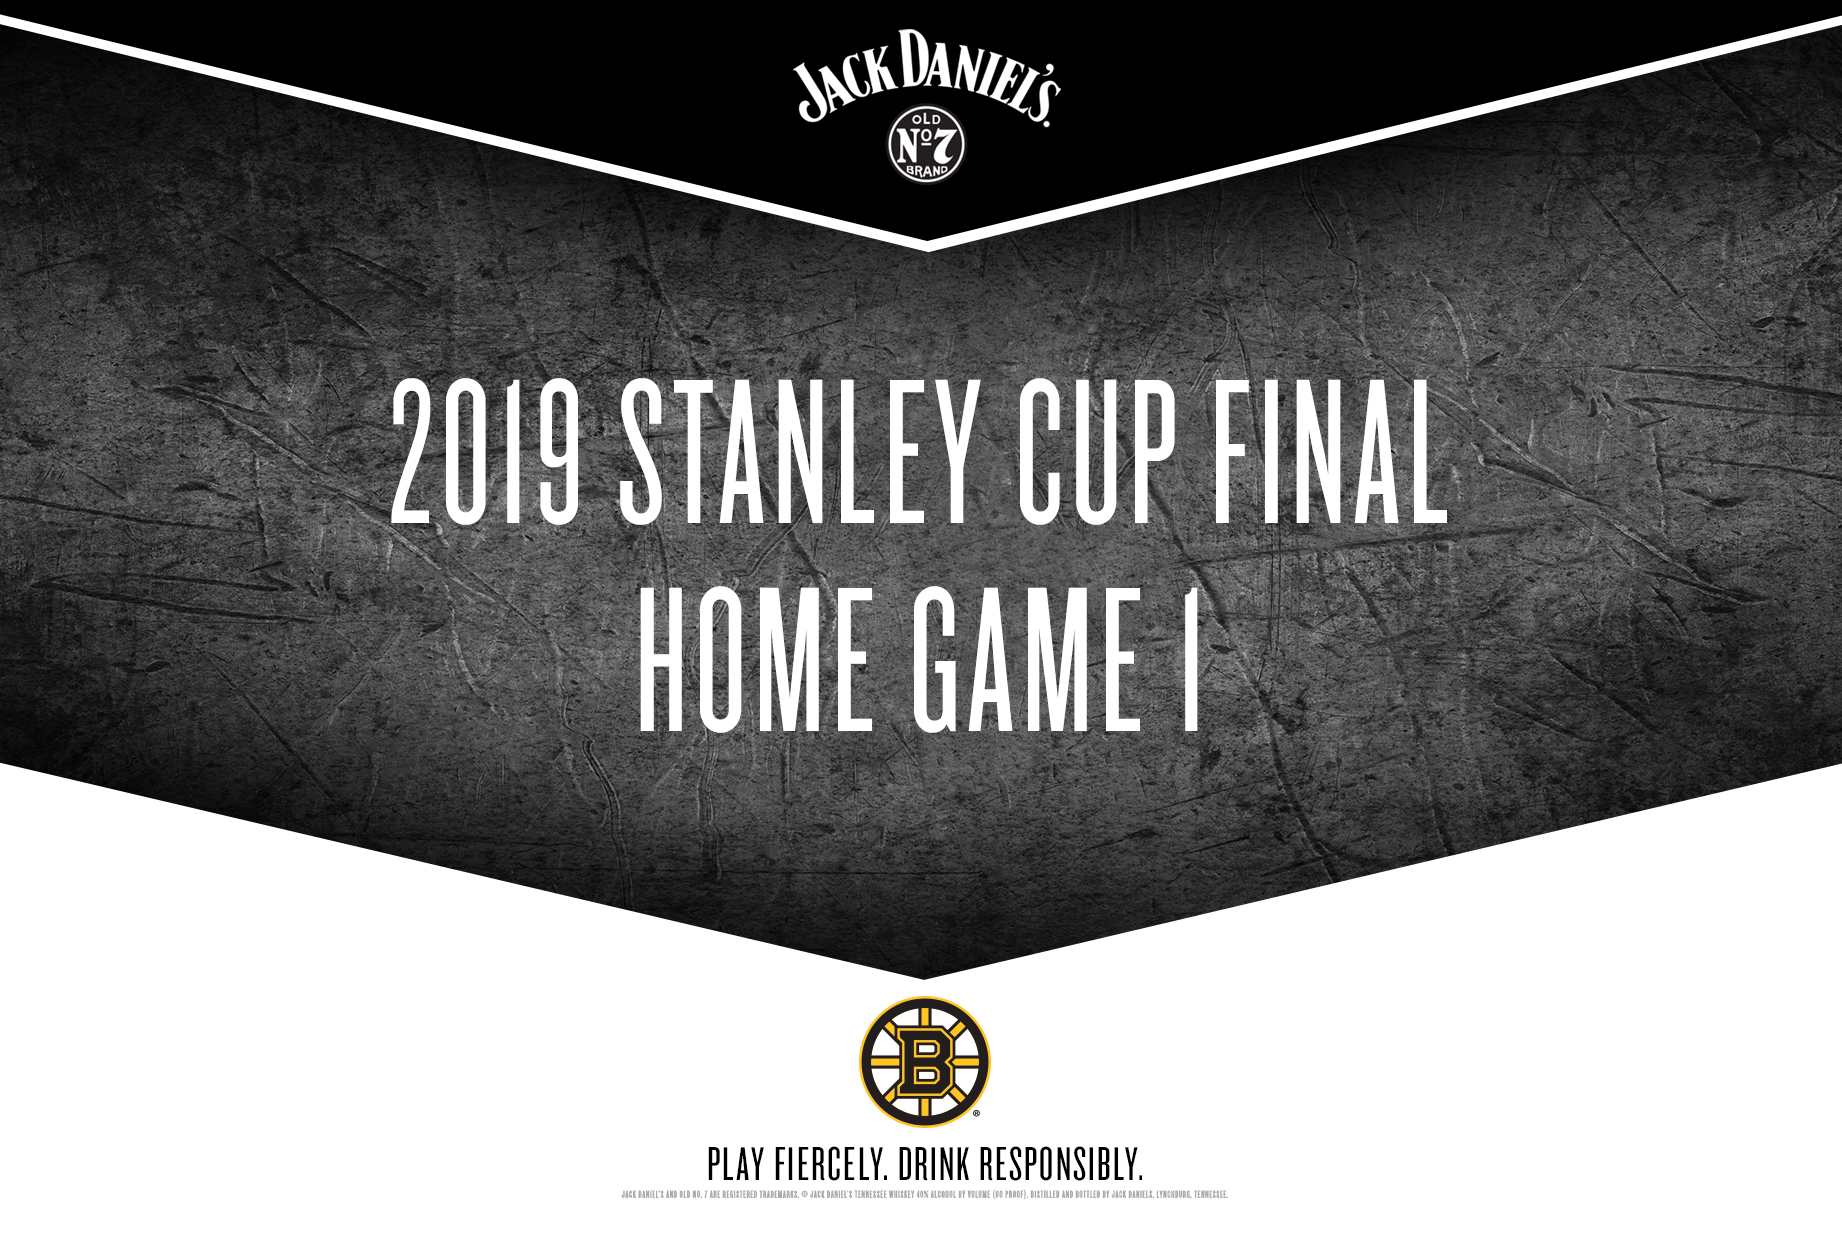 Jack Daniel's 2019 Stanley Cup Final Home Game 1 Bruins banner